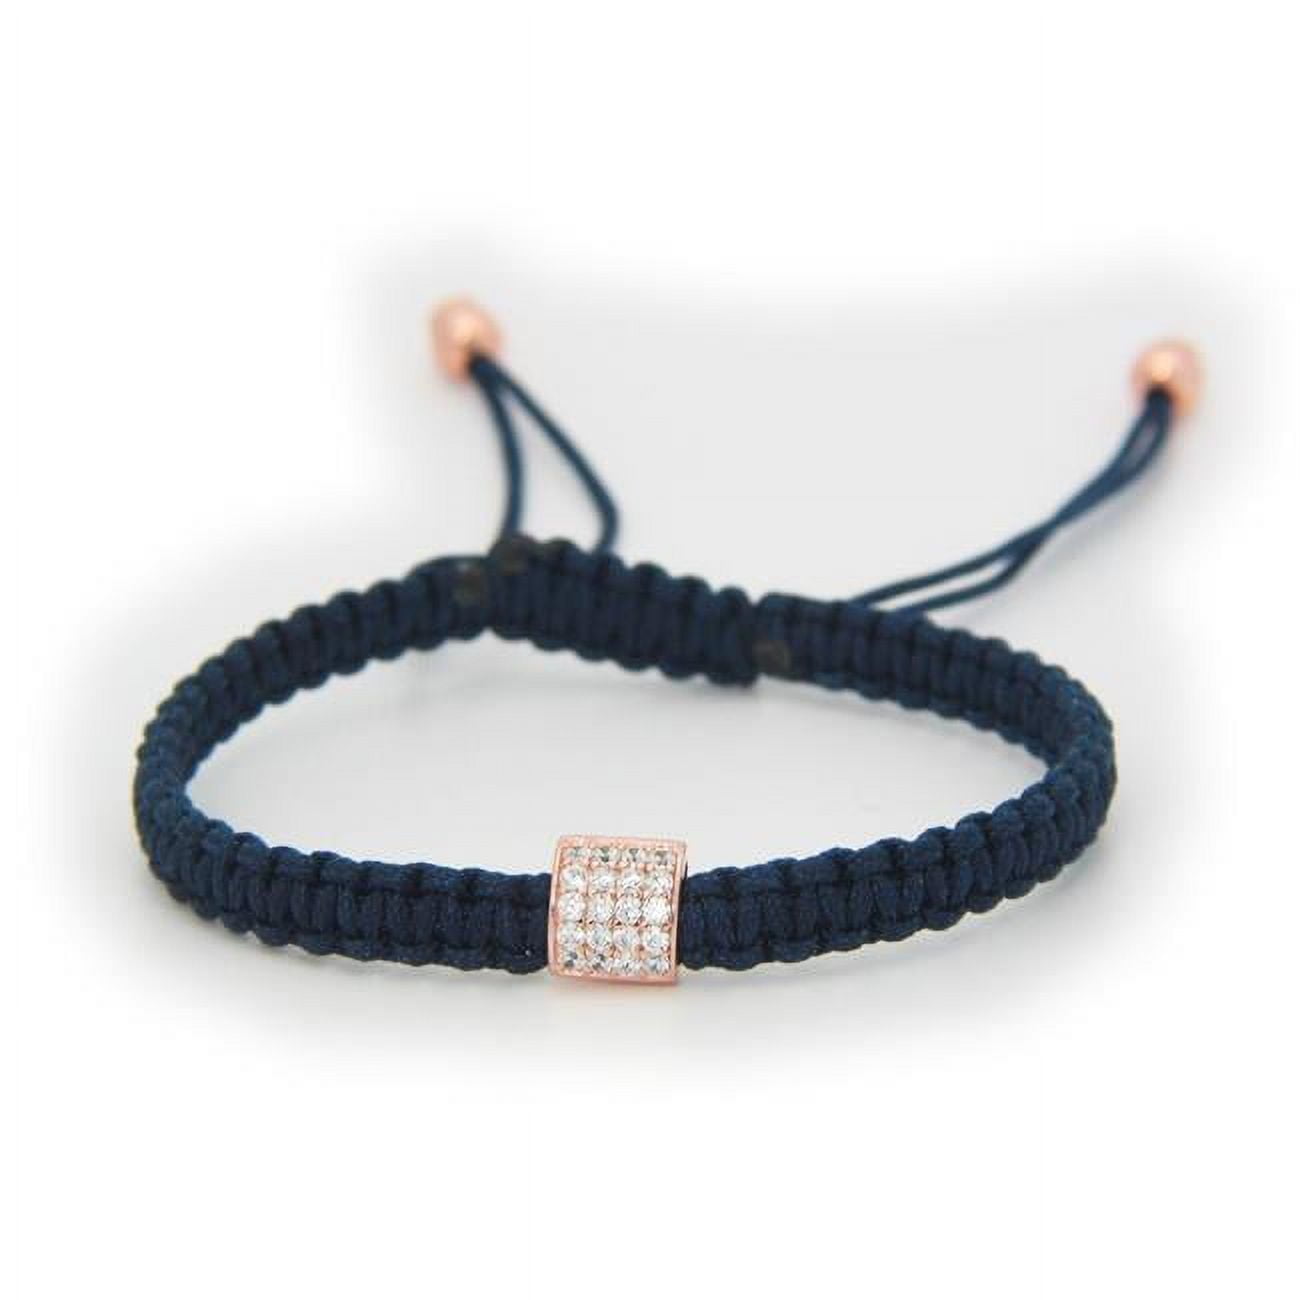 2b2315p Minimalistic Cubic Zirconia Bar Braided Cord Bracelet